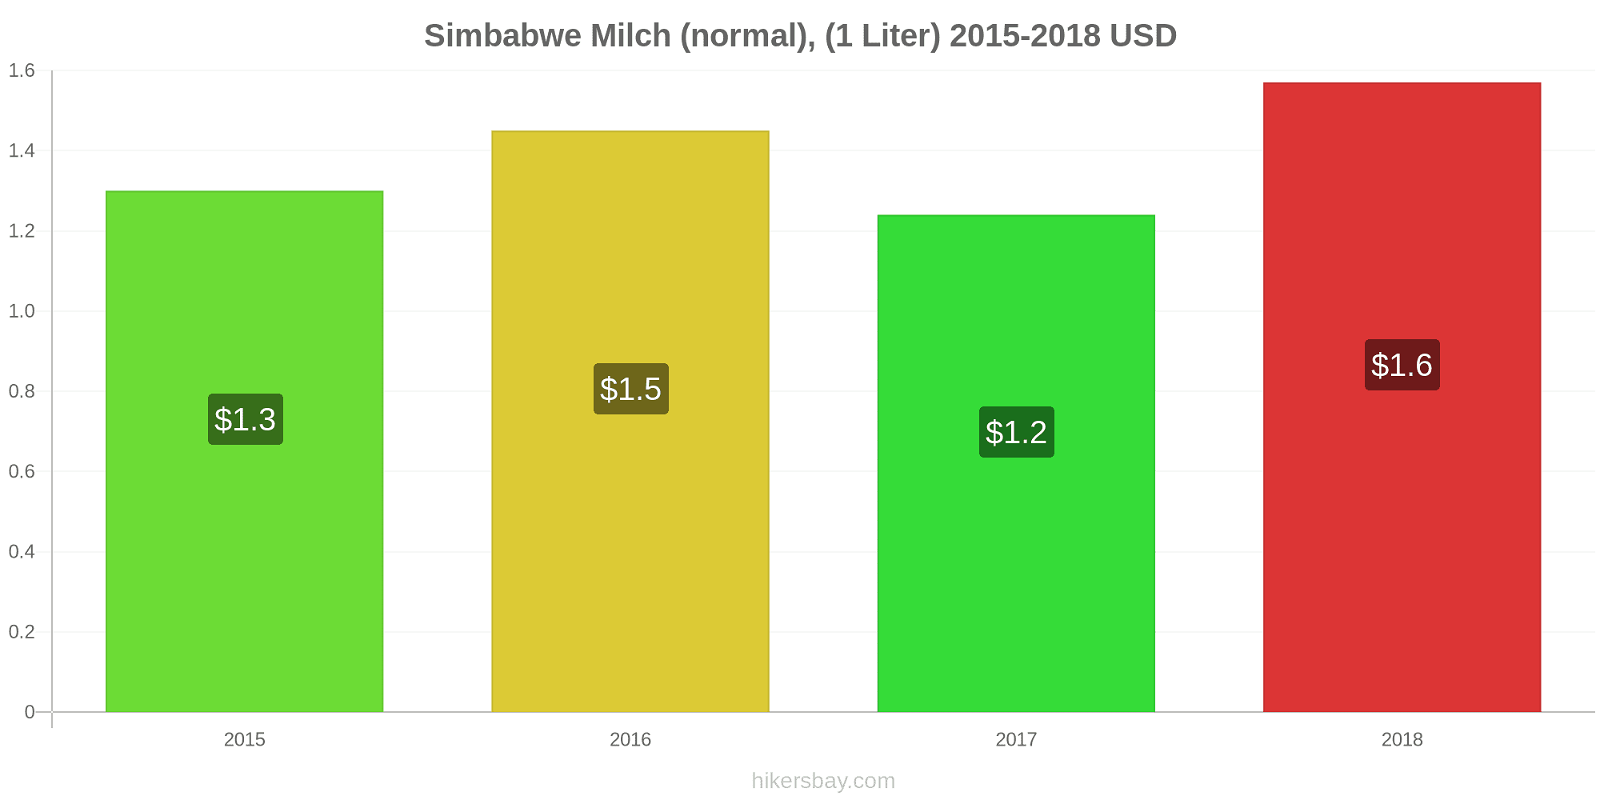 Simbabwe Preisänderungen (Regulär), Milch (1 Liter) hikersbay.com